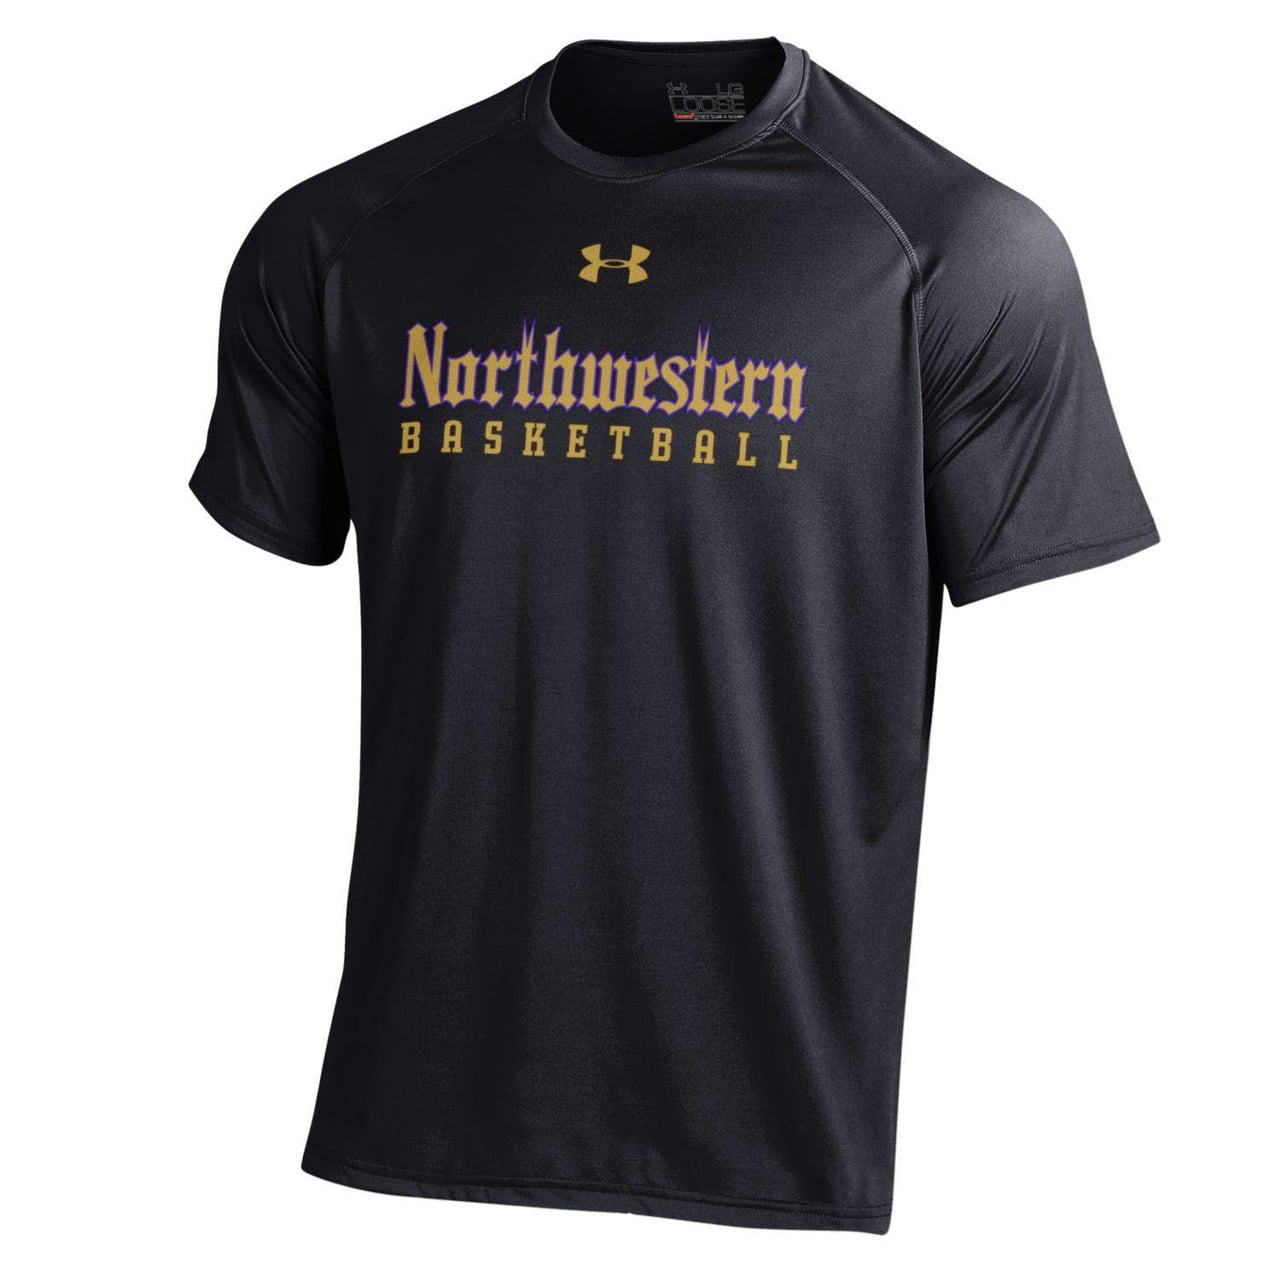 Under Armour - Northwestern Wildcats Adult Gothic Basketball T-Shirt ...